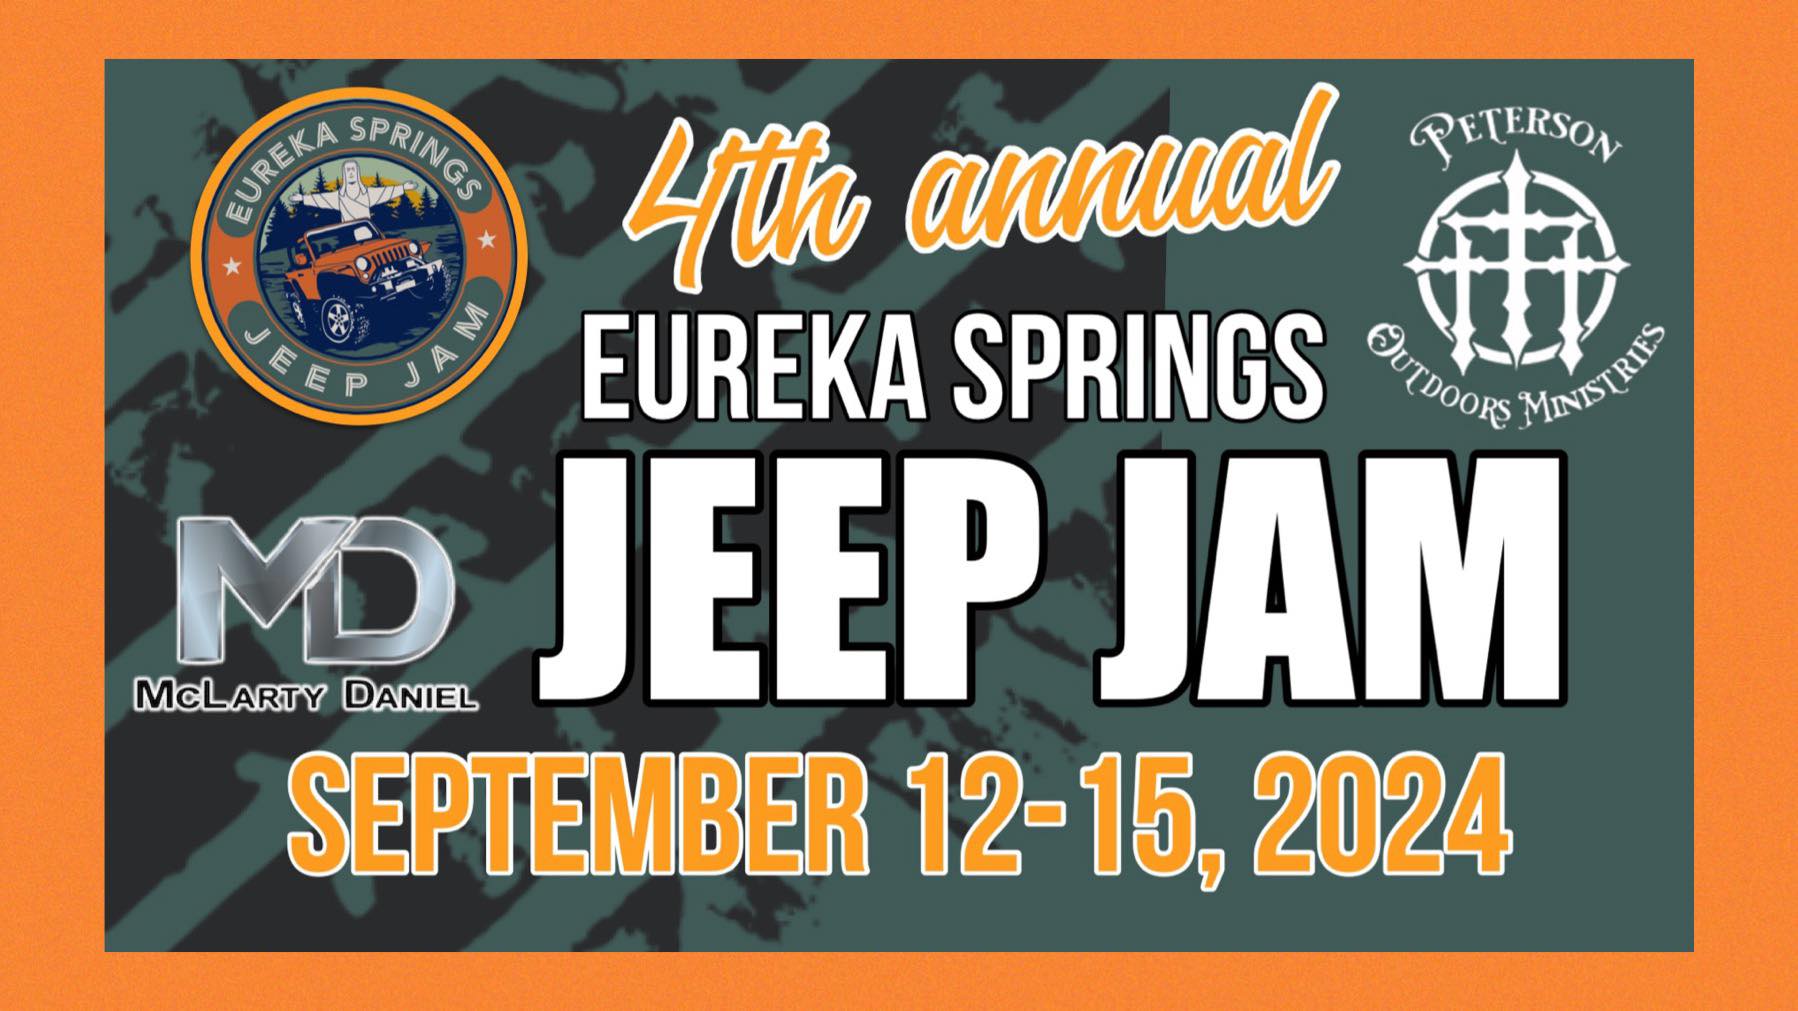 4th Annual Eureka Springs Jeep Jam 09/12/2024 Eureka Springs